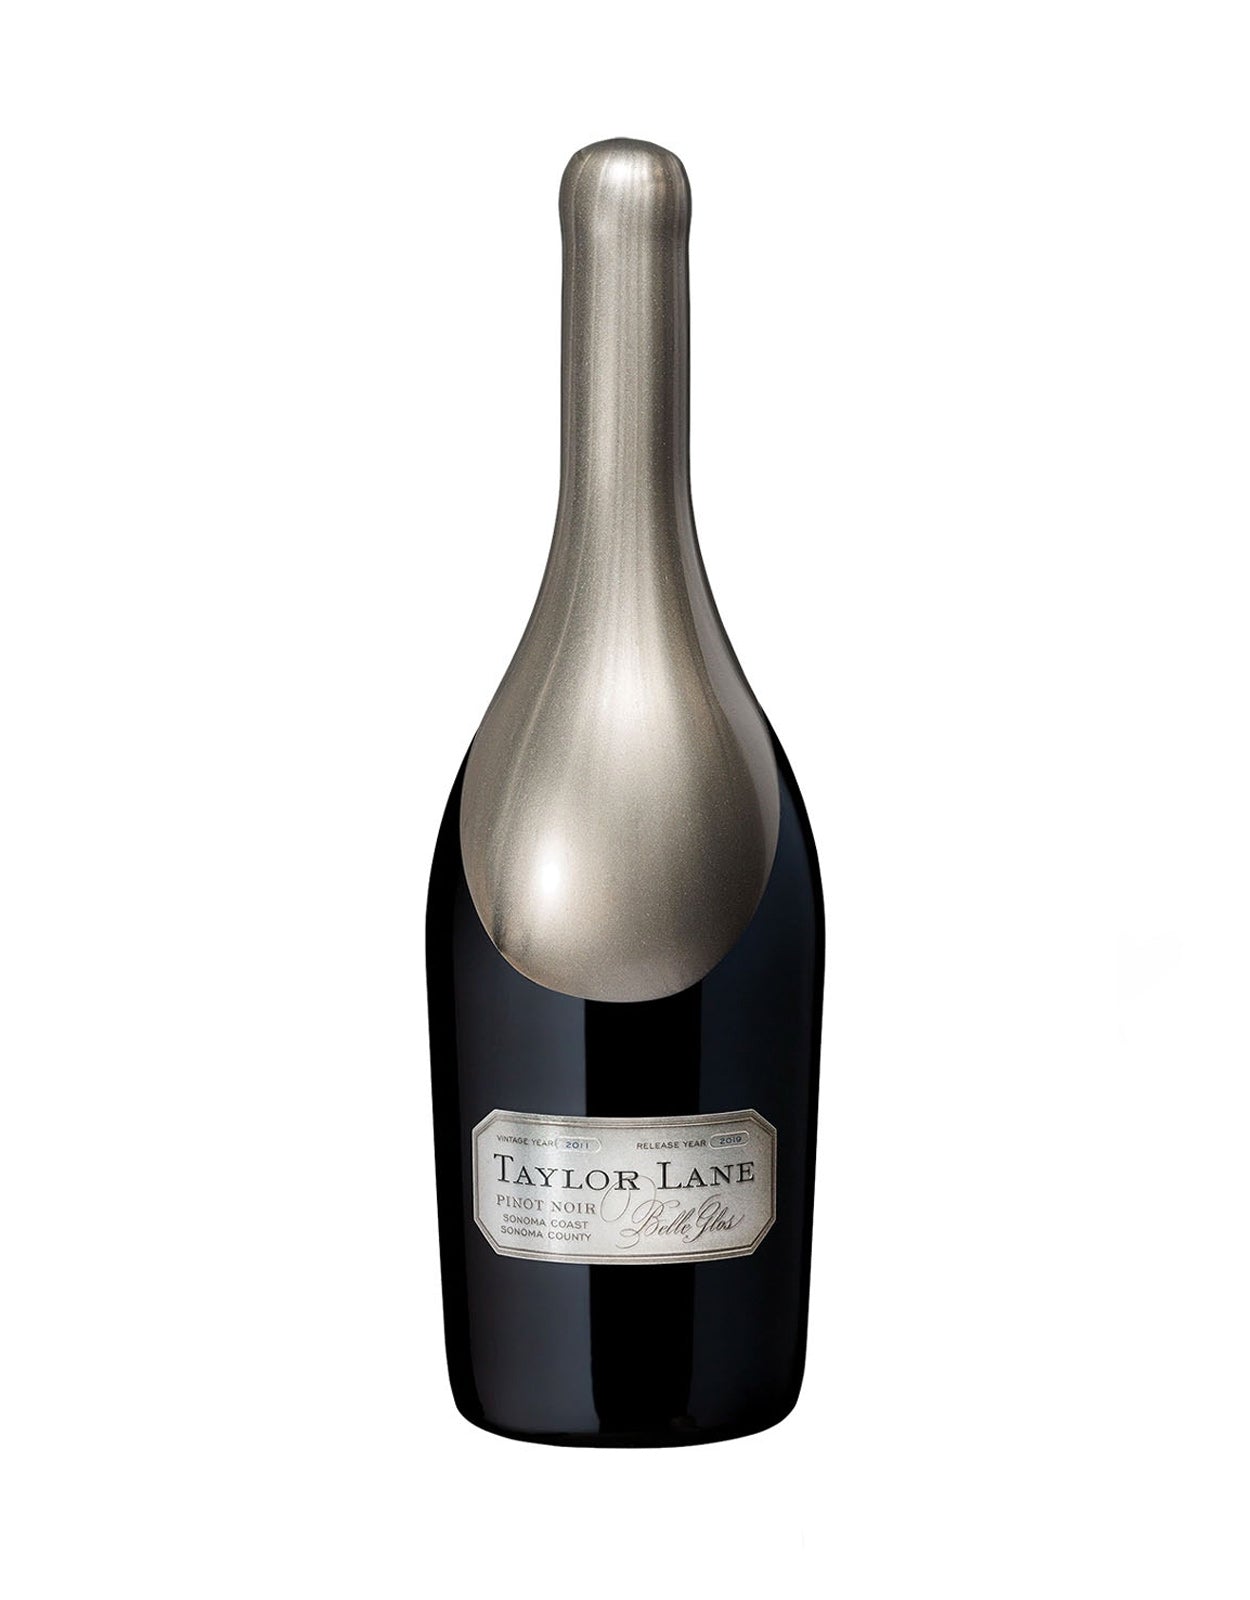 Belle Glos Pinot Noir Taylor Lane 2014 - 1.5 Litre Bottle